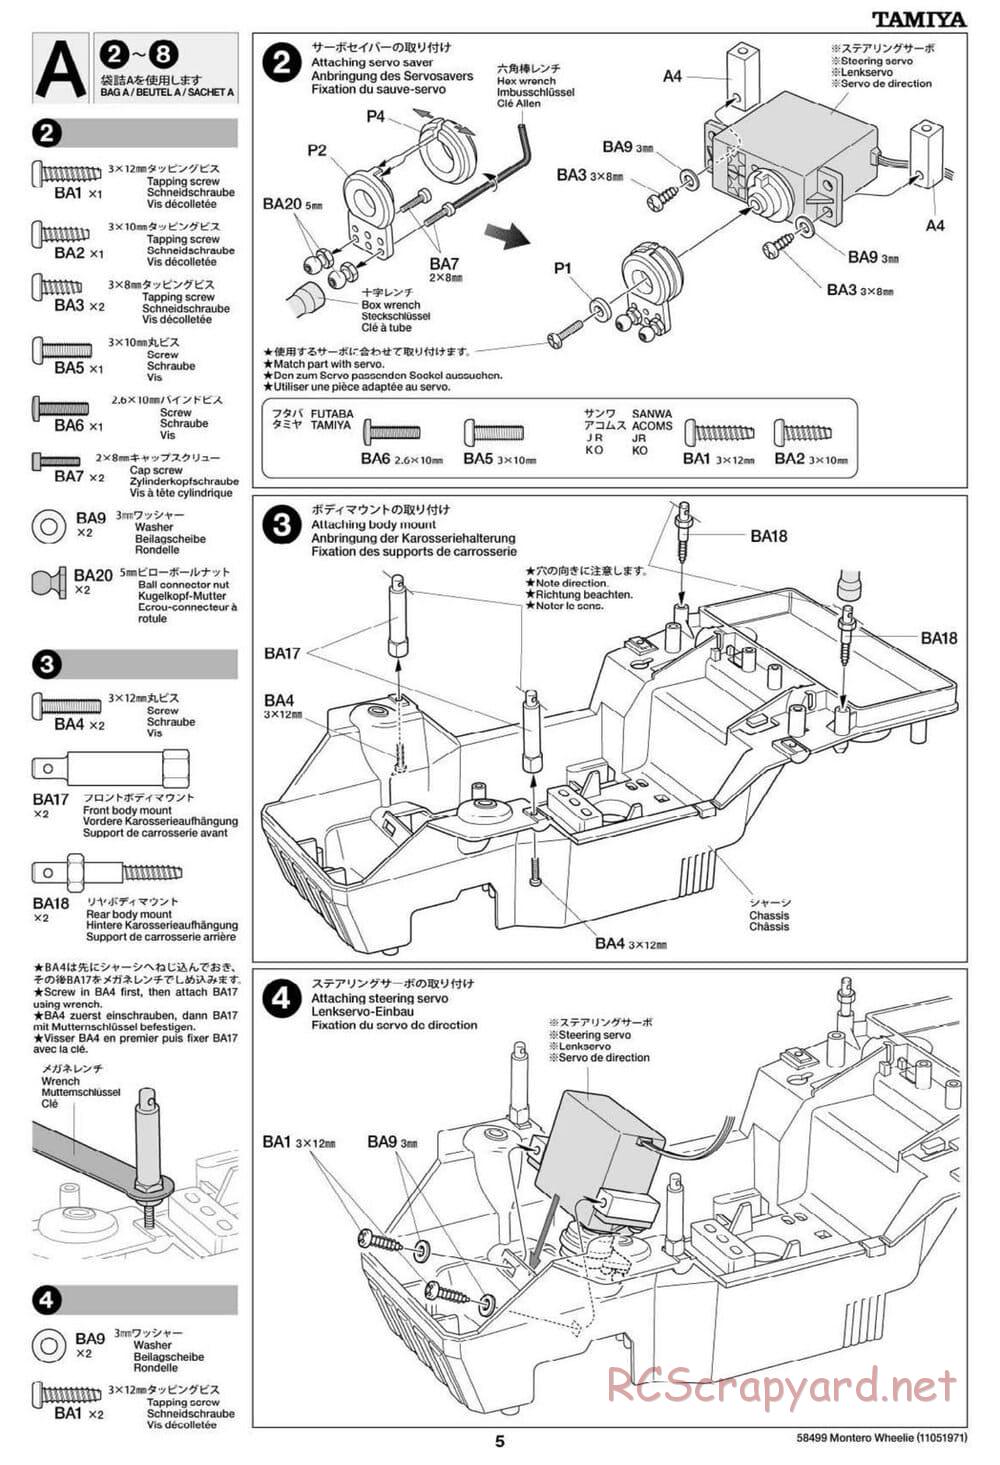 Tamiya - Mitsubishi Montero Wheelie - CW-01 Chassis - Manual - Page 5